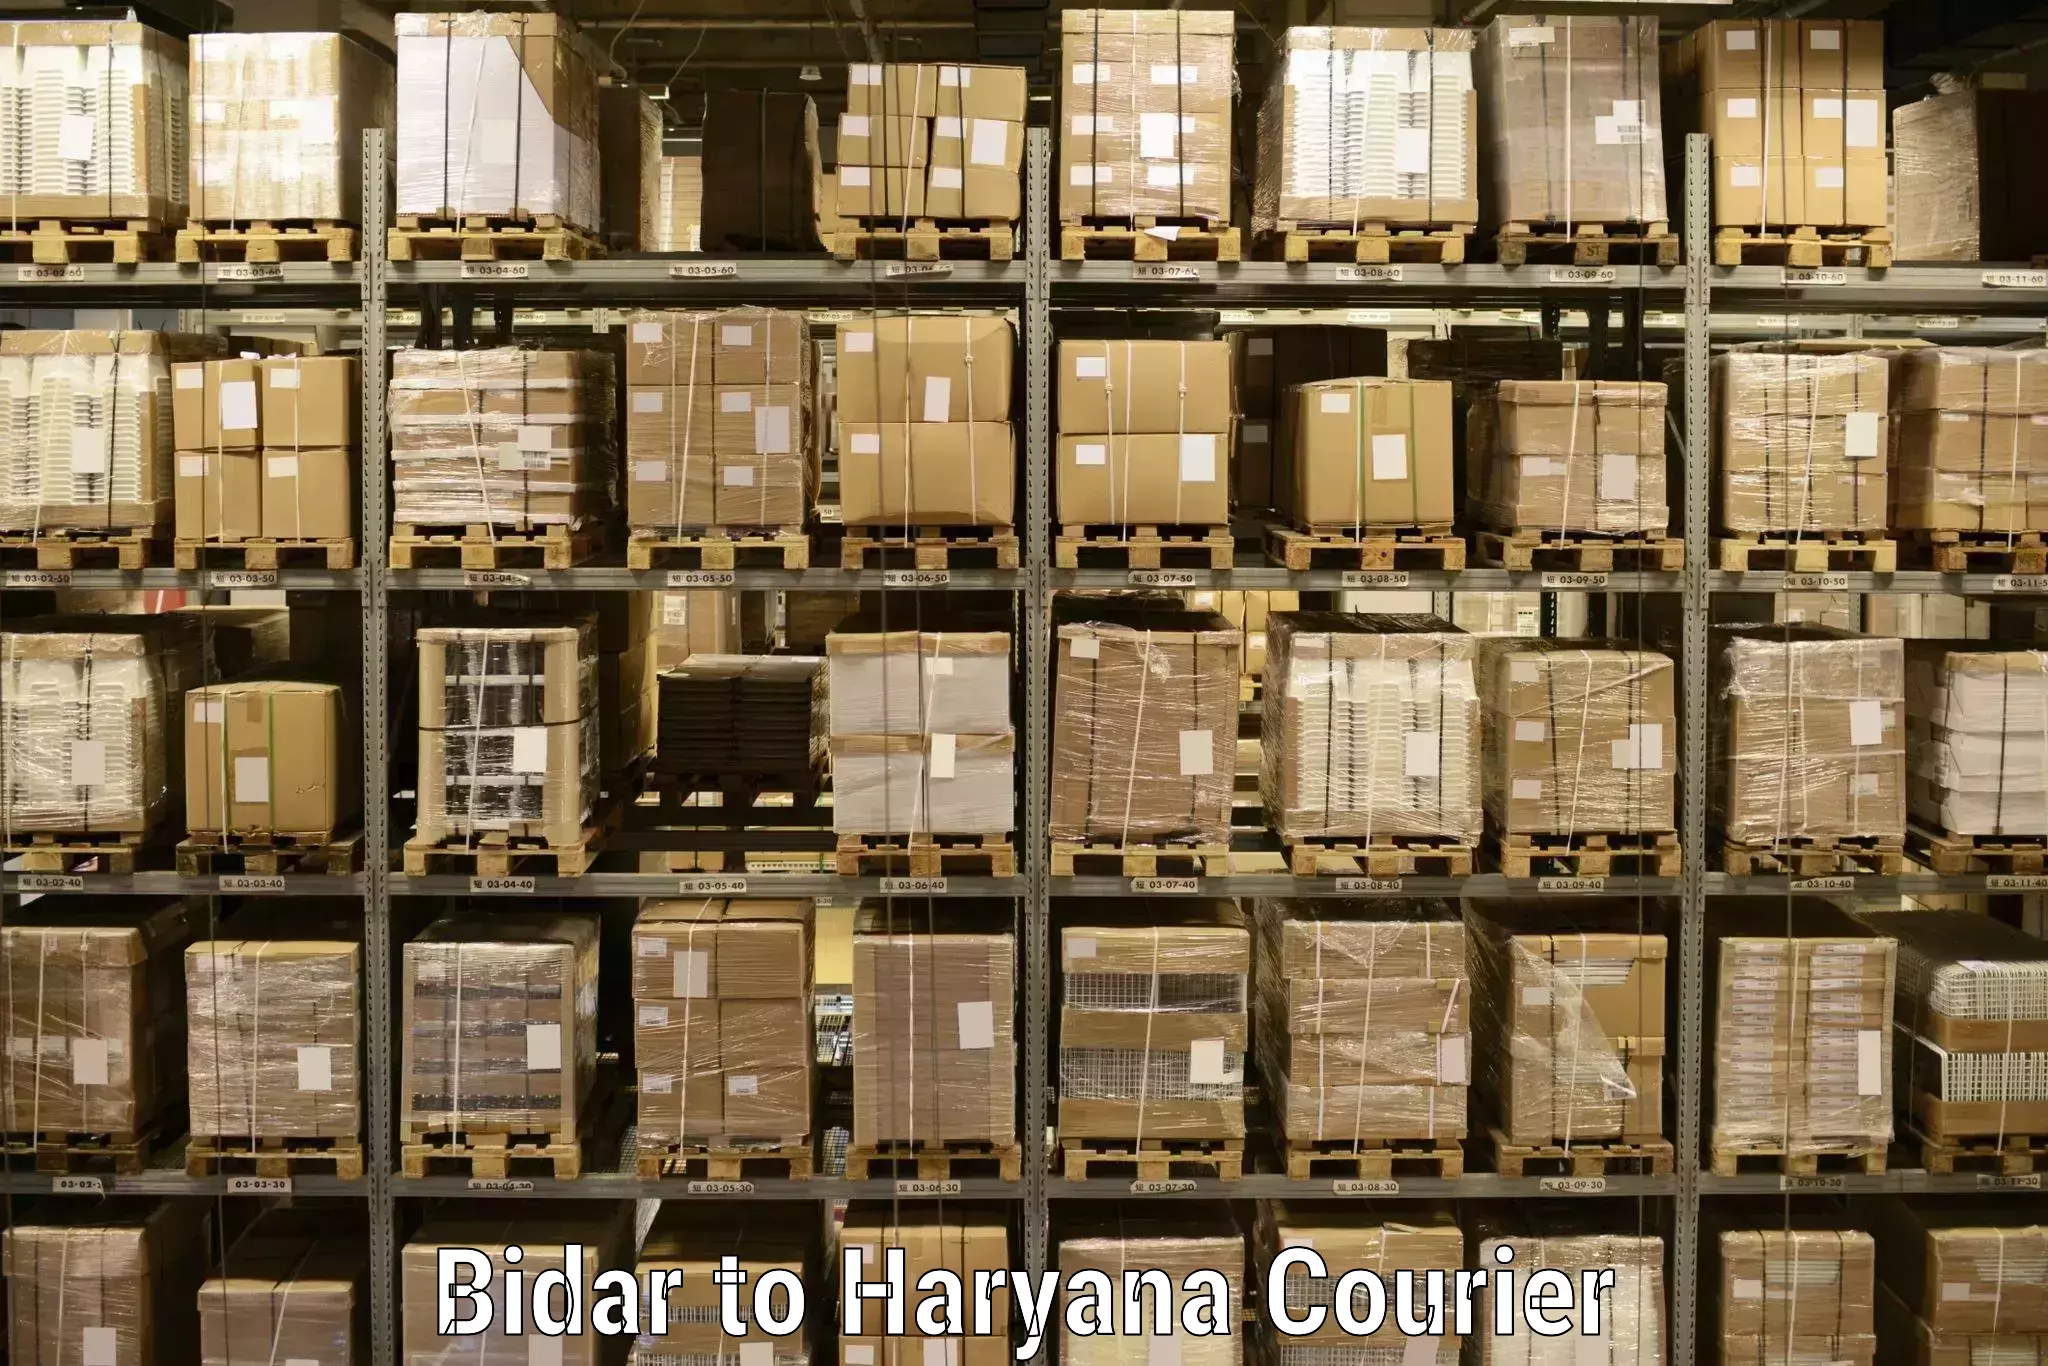 Courier service comparison Bidar to Julana